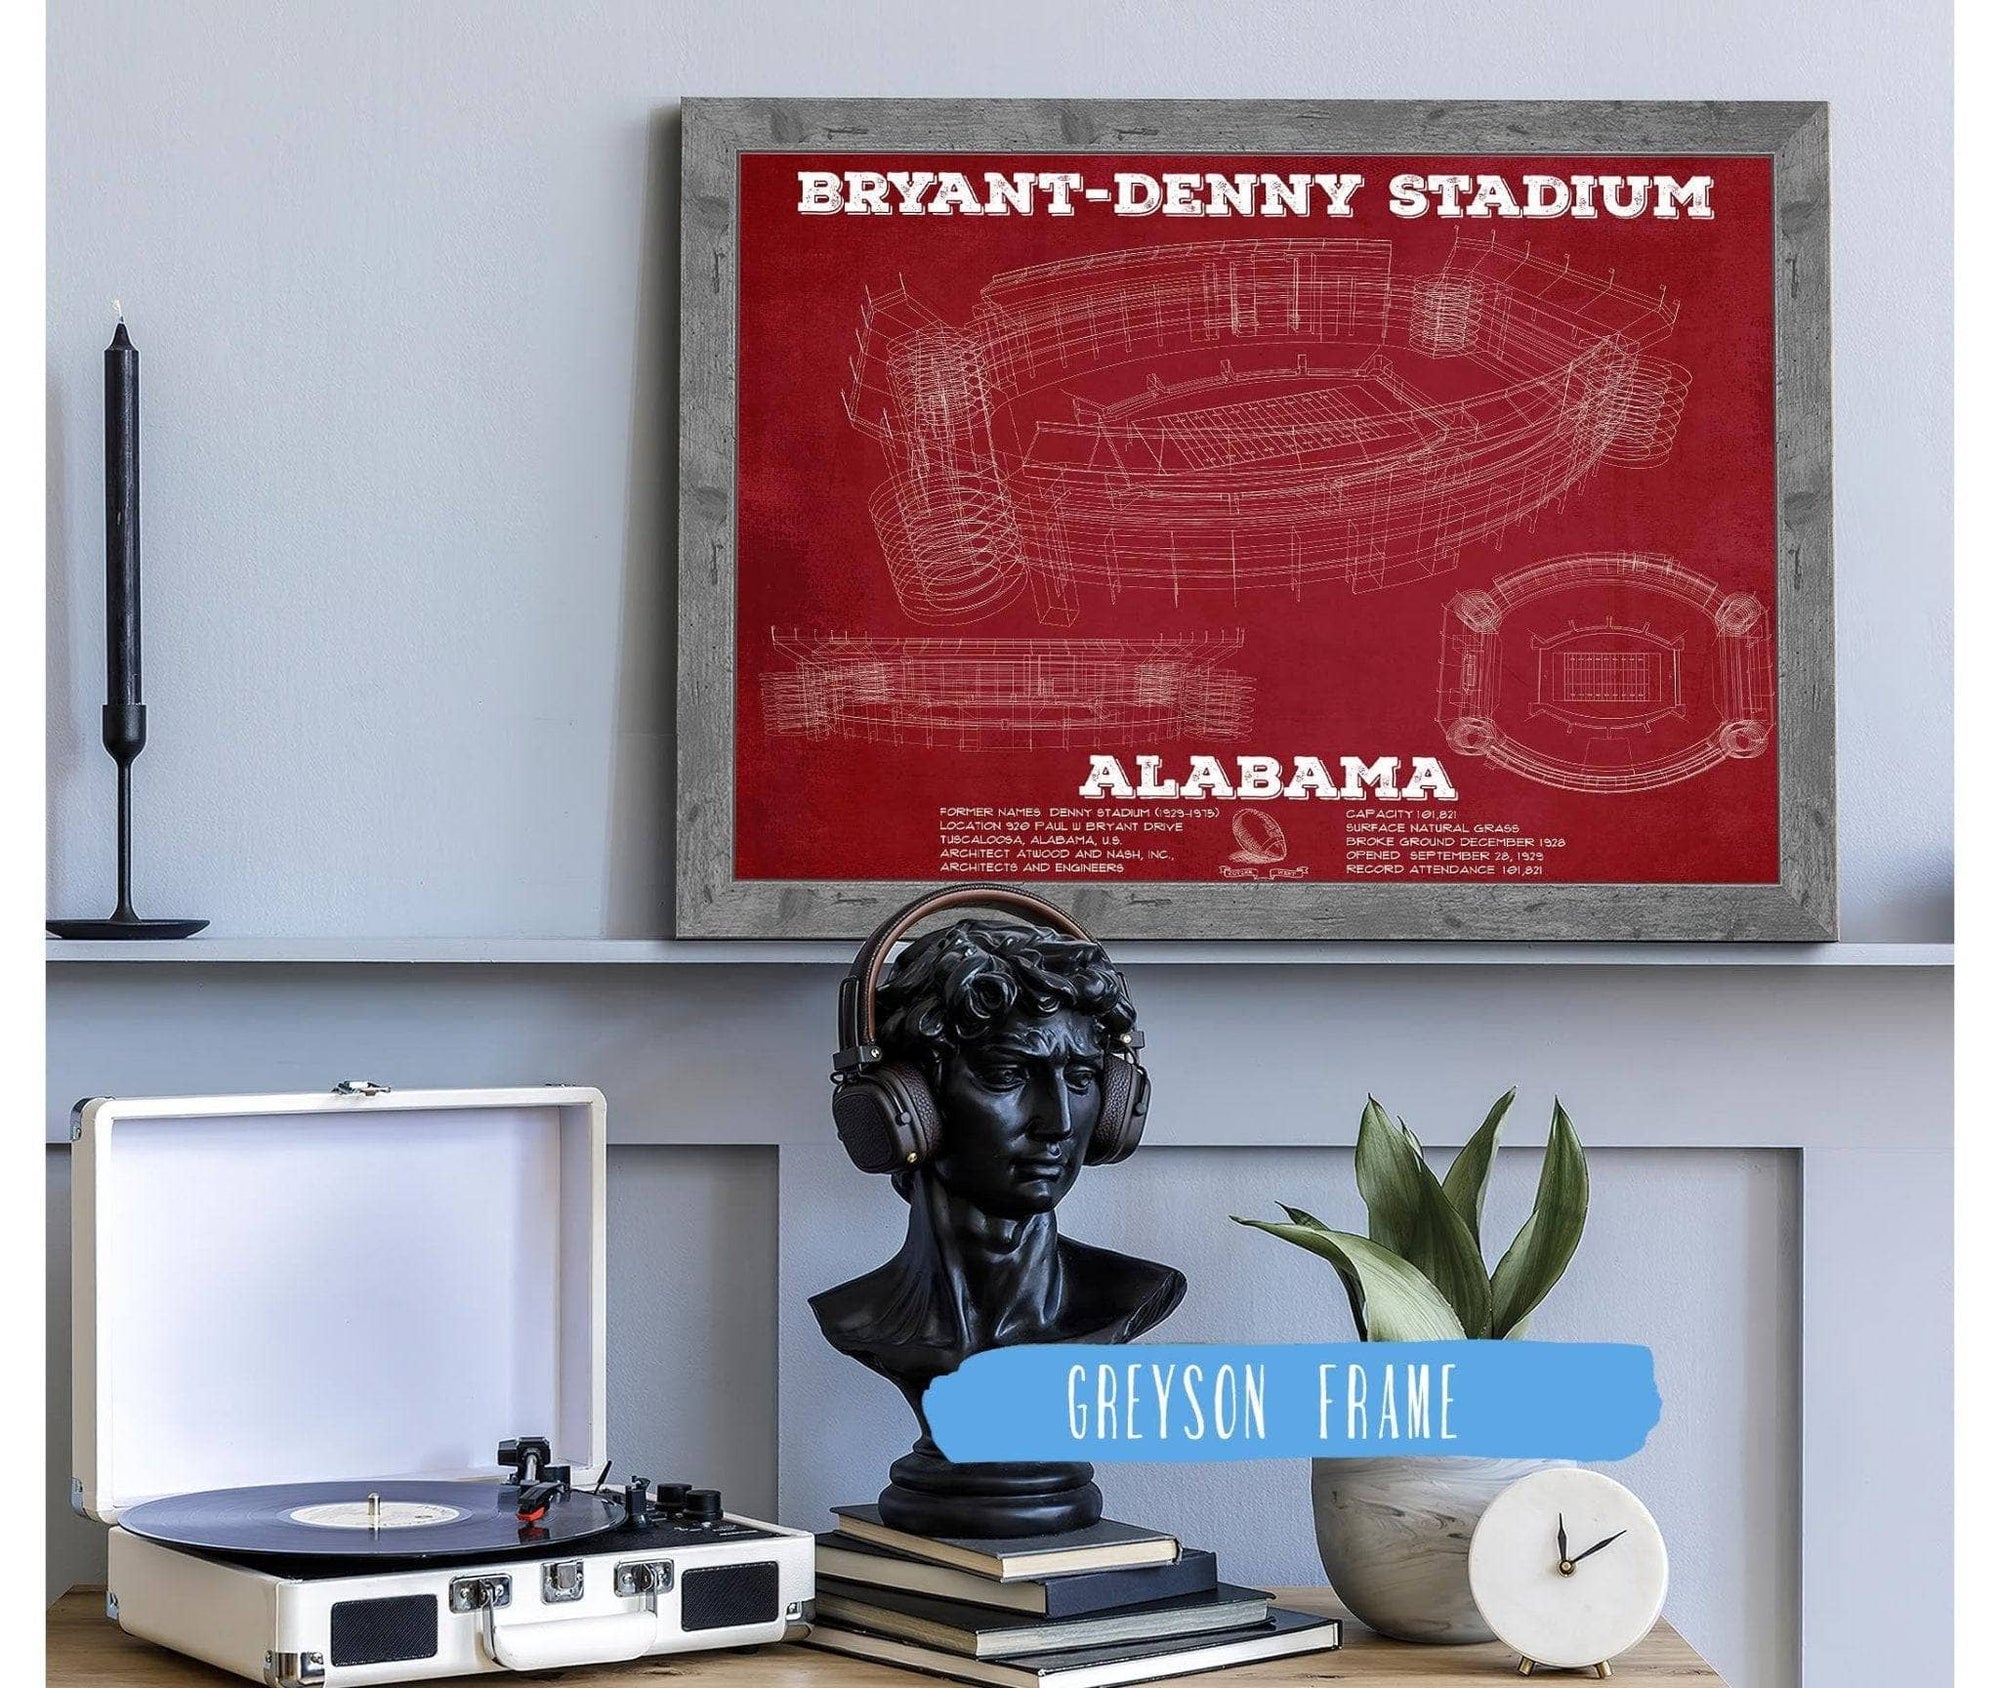 Cutler West College Football Collection Alabama Crimson Tide Stadium Art - Bryant-Denny Stadium Vintage Seating Chart